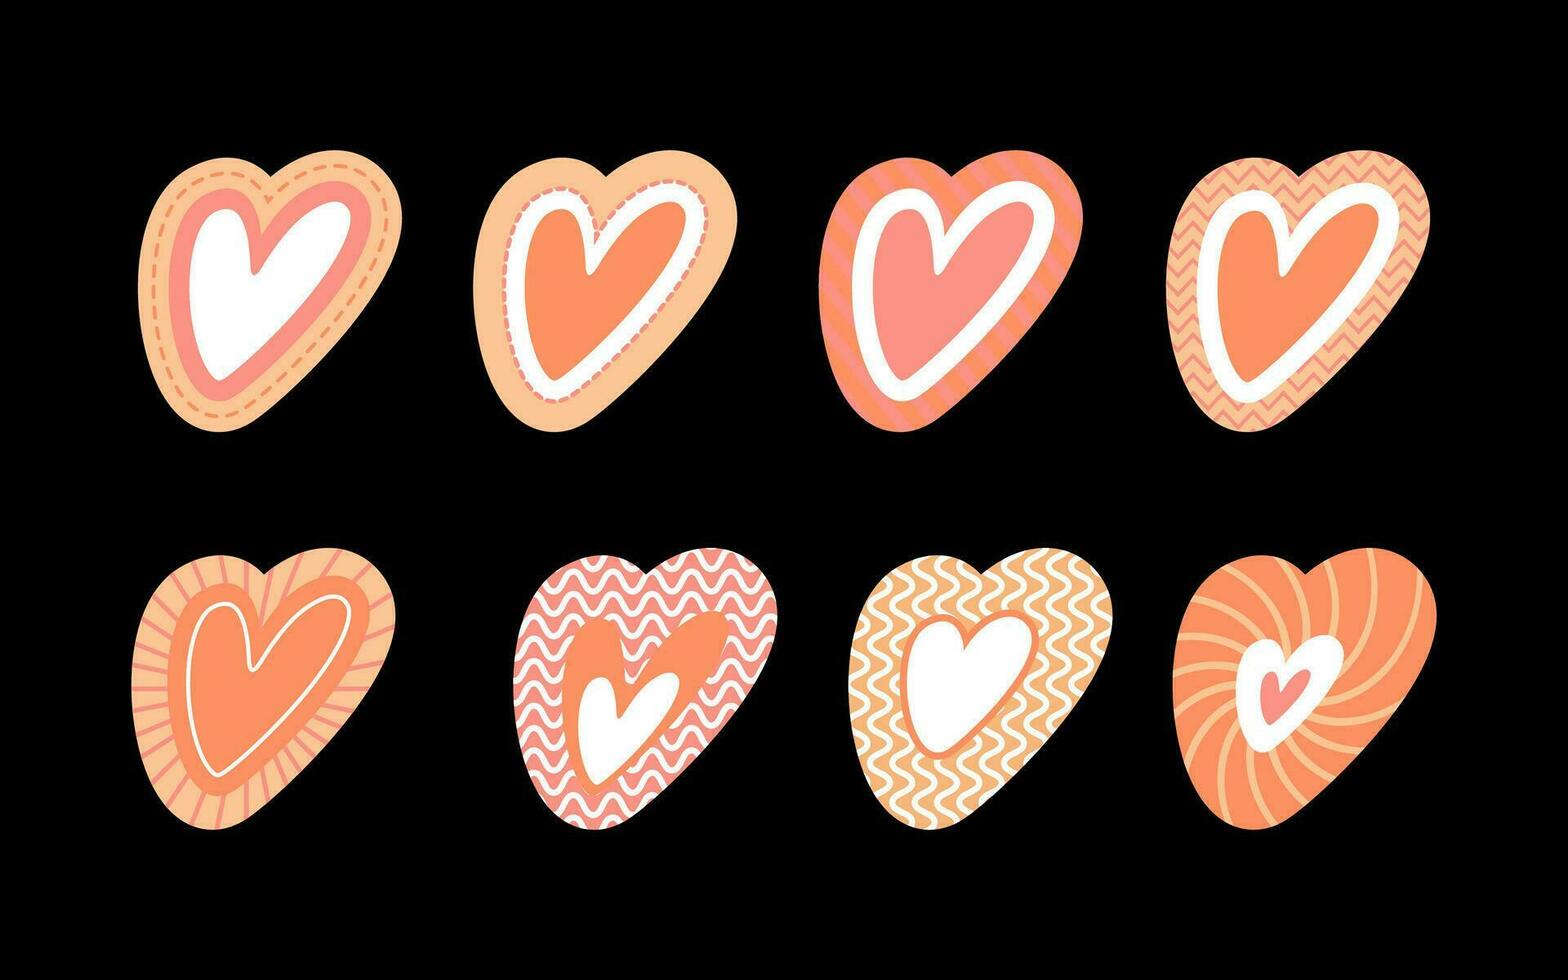 Heart Animated Sticker